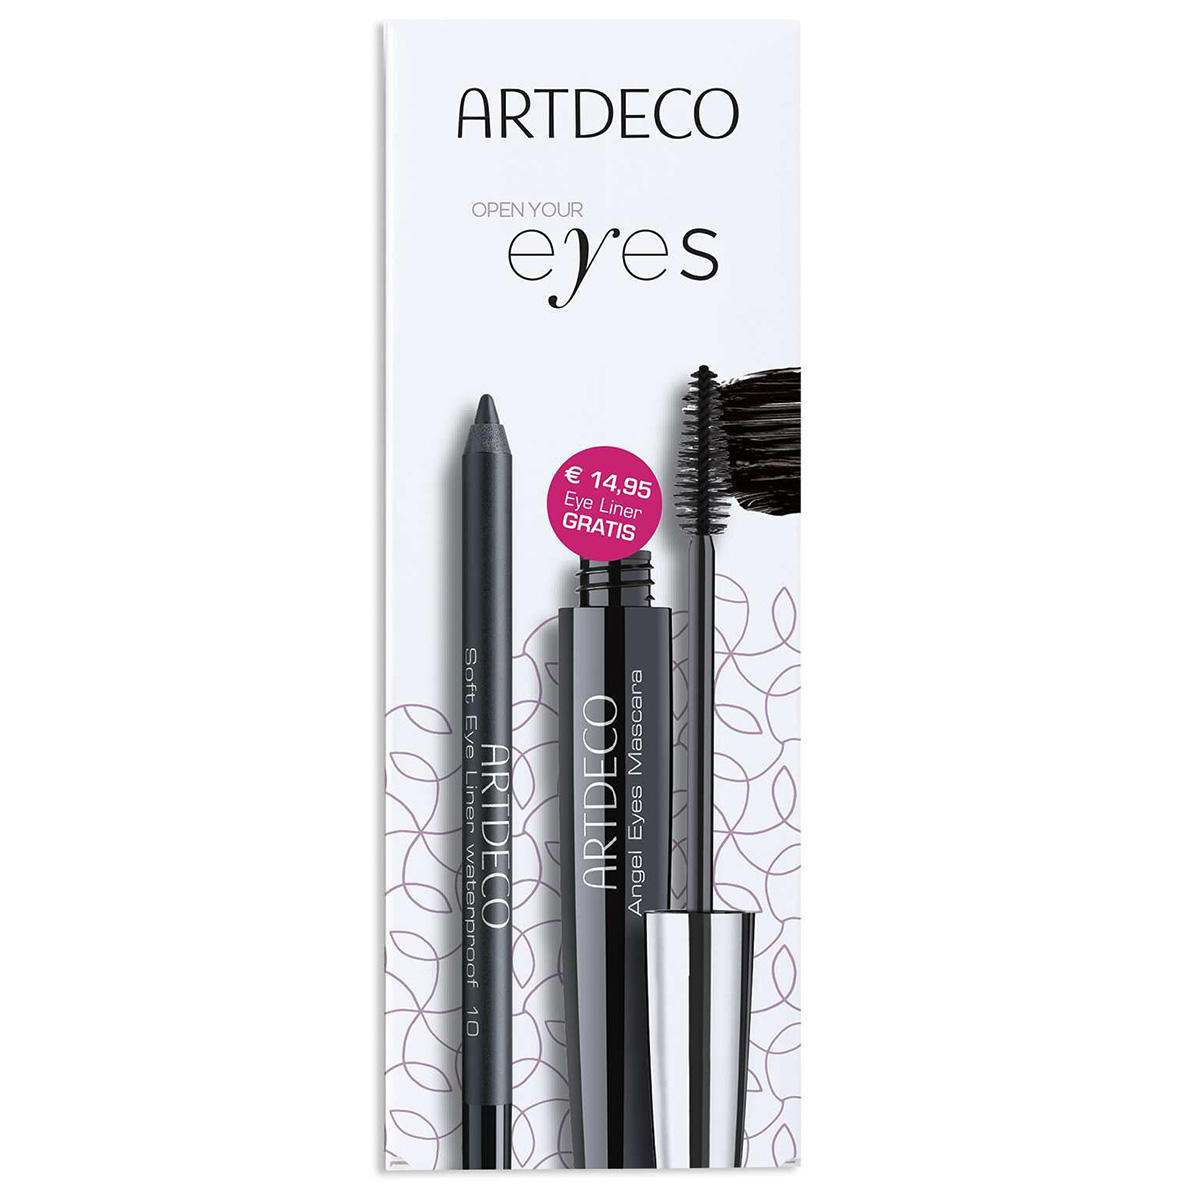 ARTDECO Open your Eyes Angel Eyes Mascara & Soft Eyeliner Waterproof Set  - 1